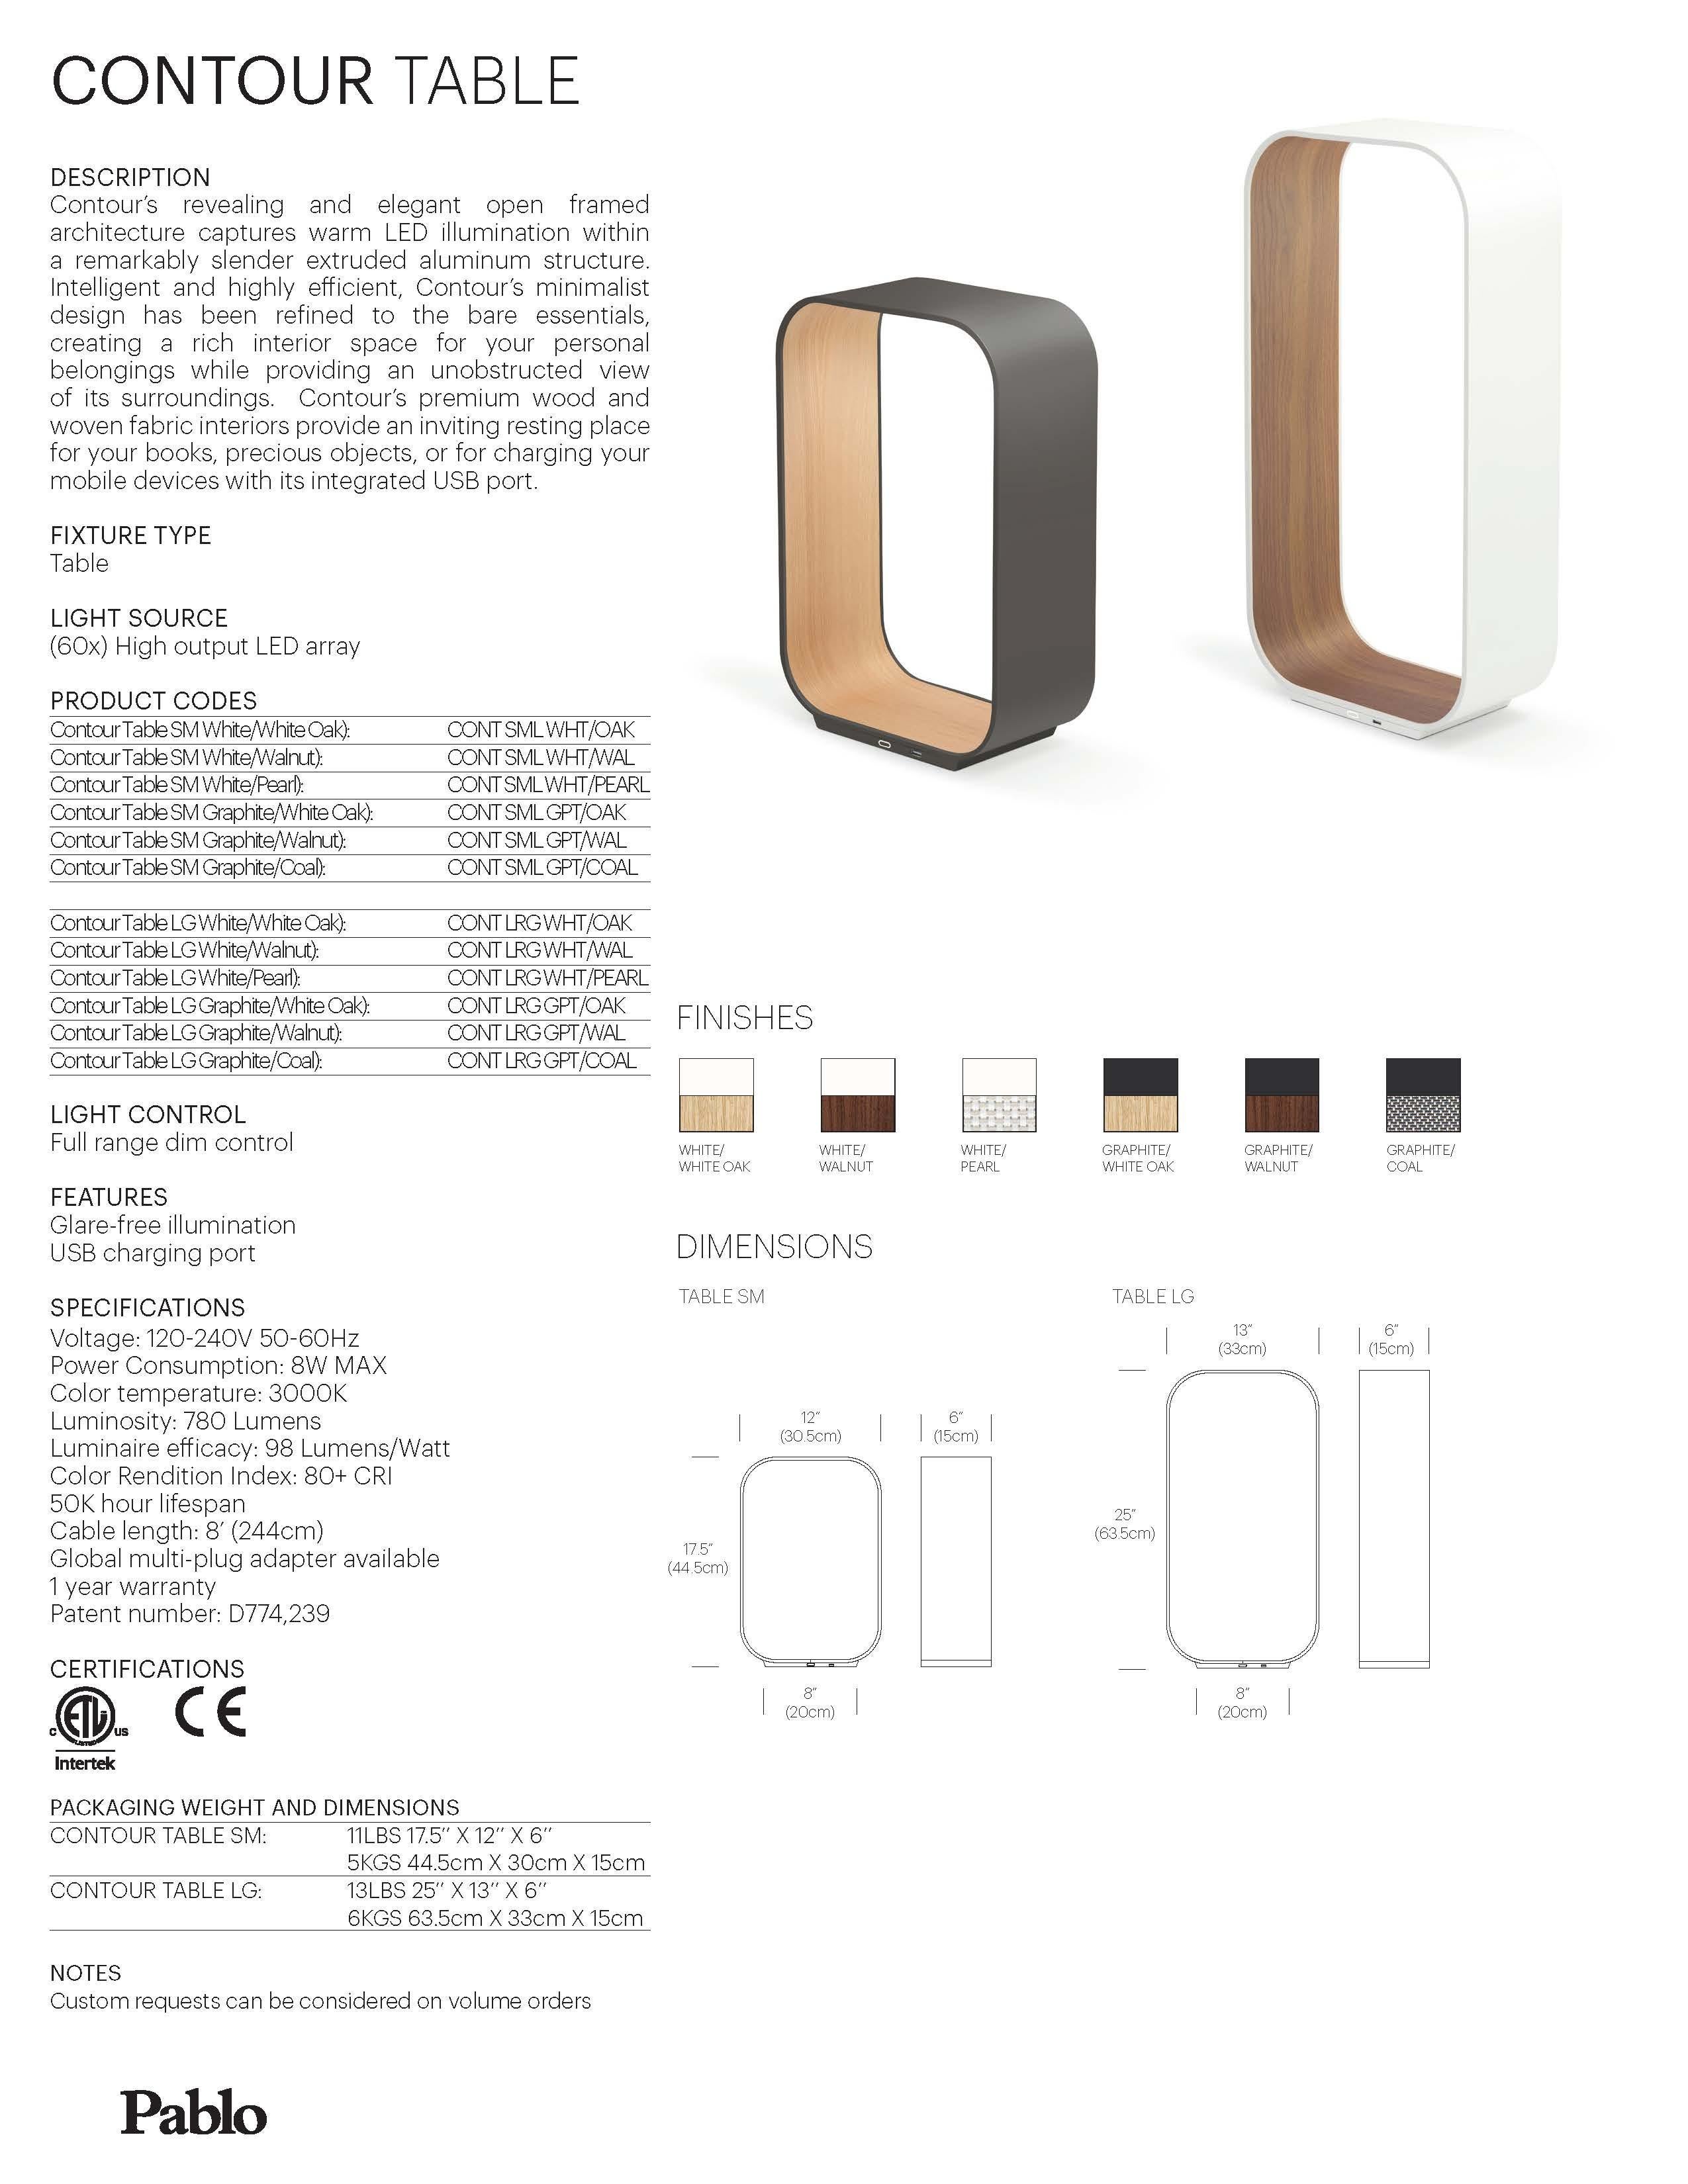 Contemporary Contour Small Table Lamp in Graphite & White Oak by Pablo Designs For Sale